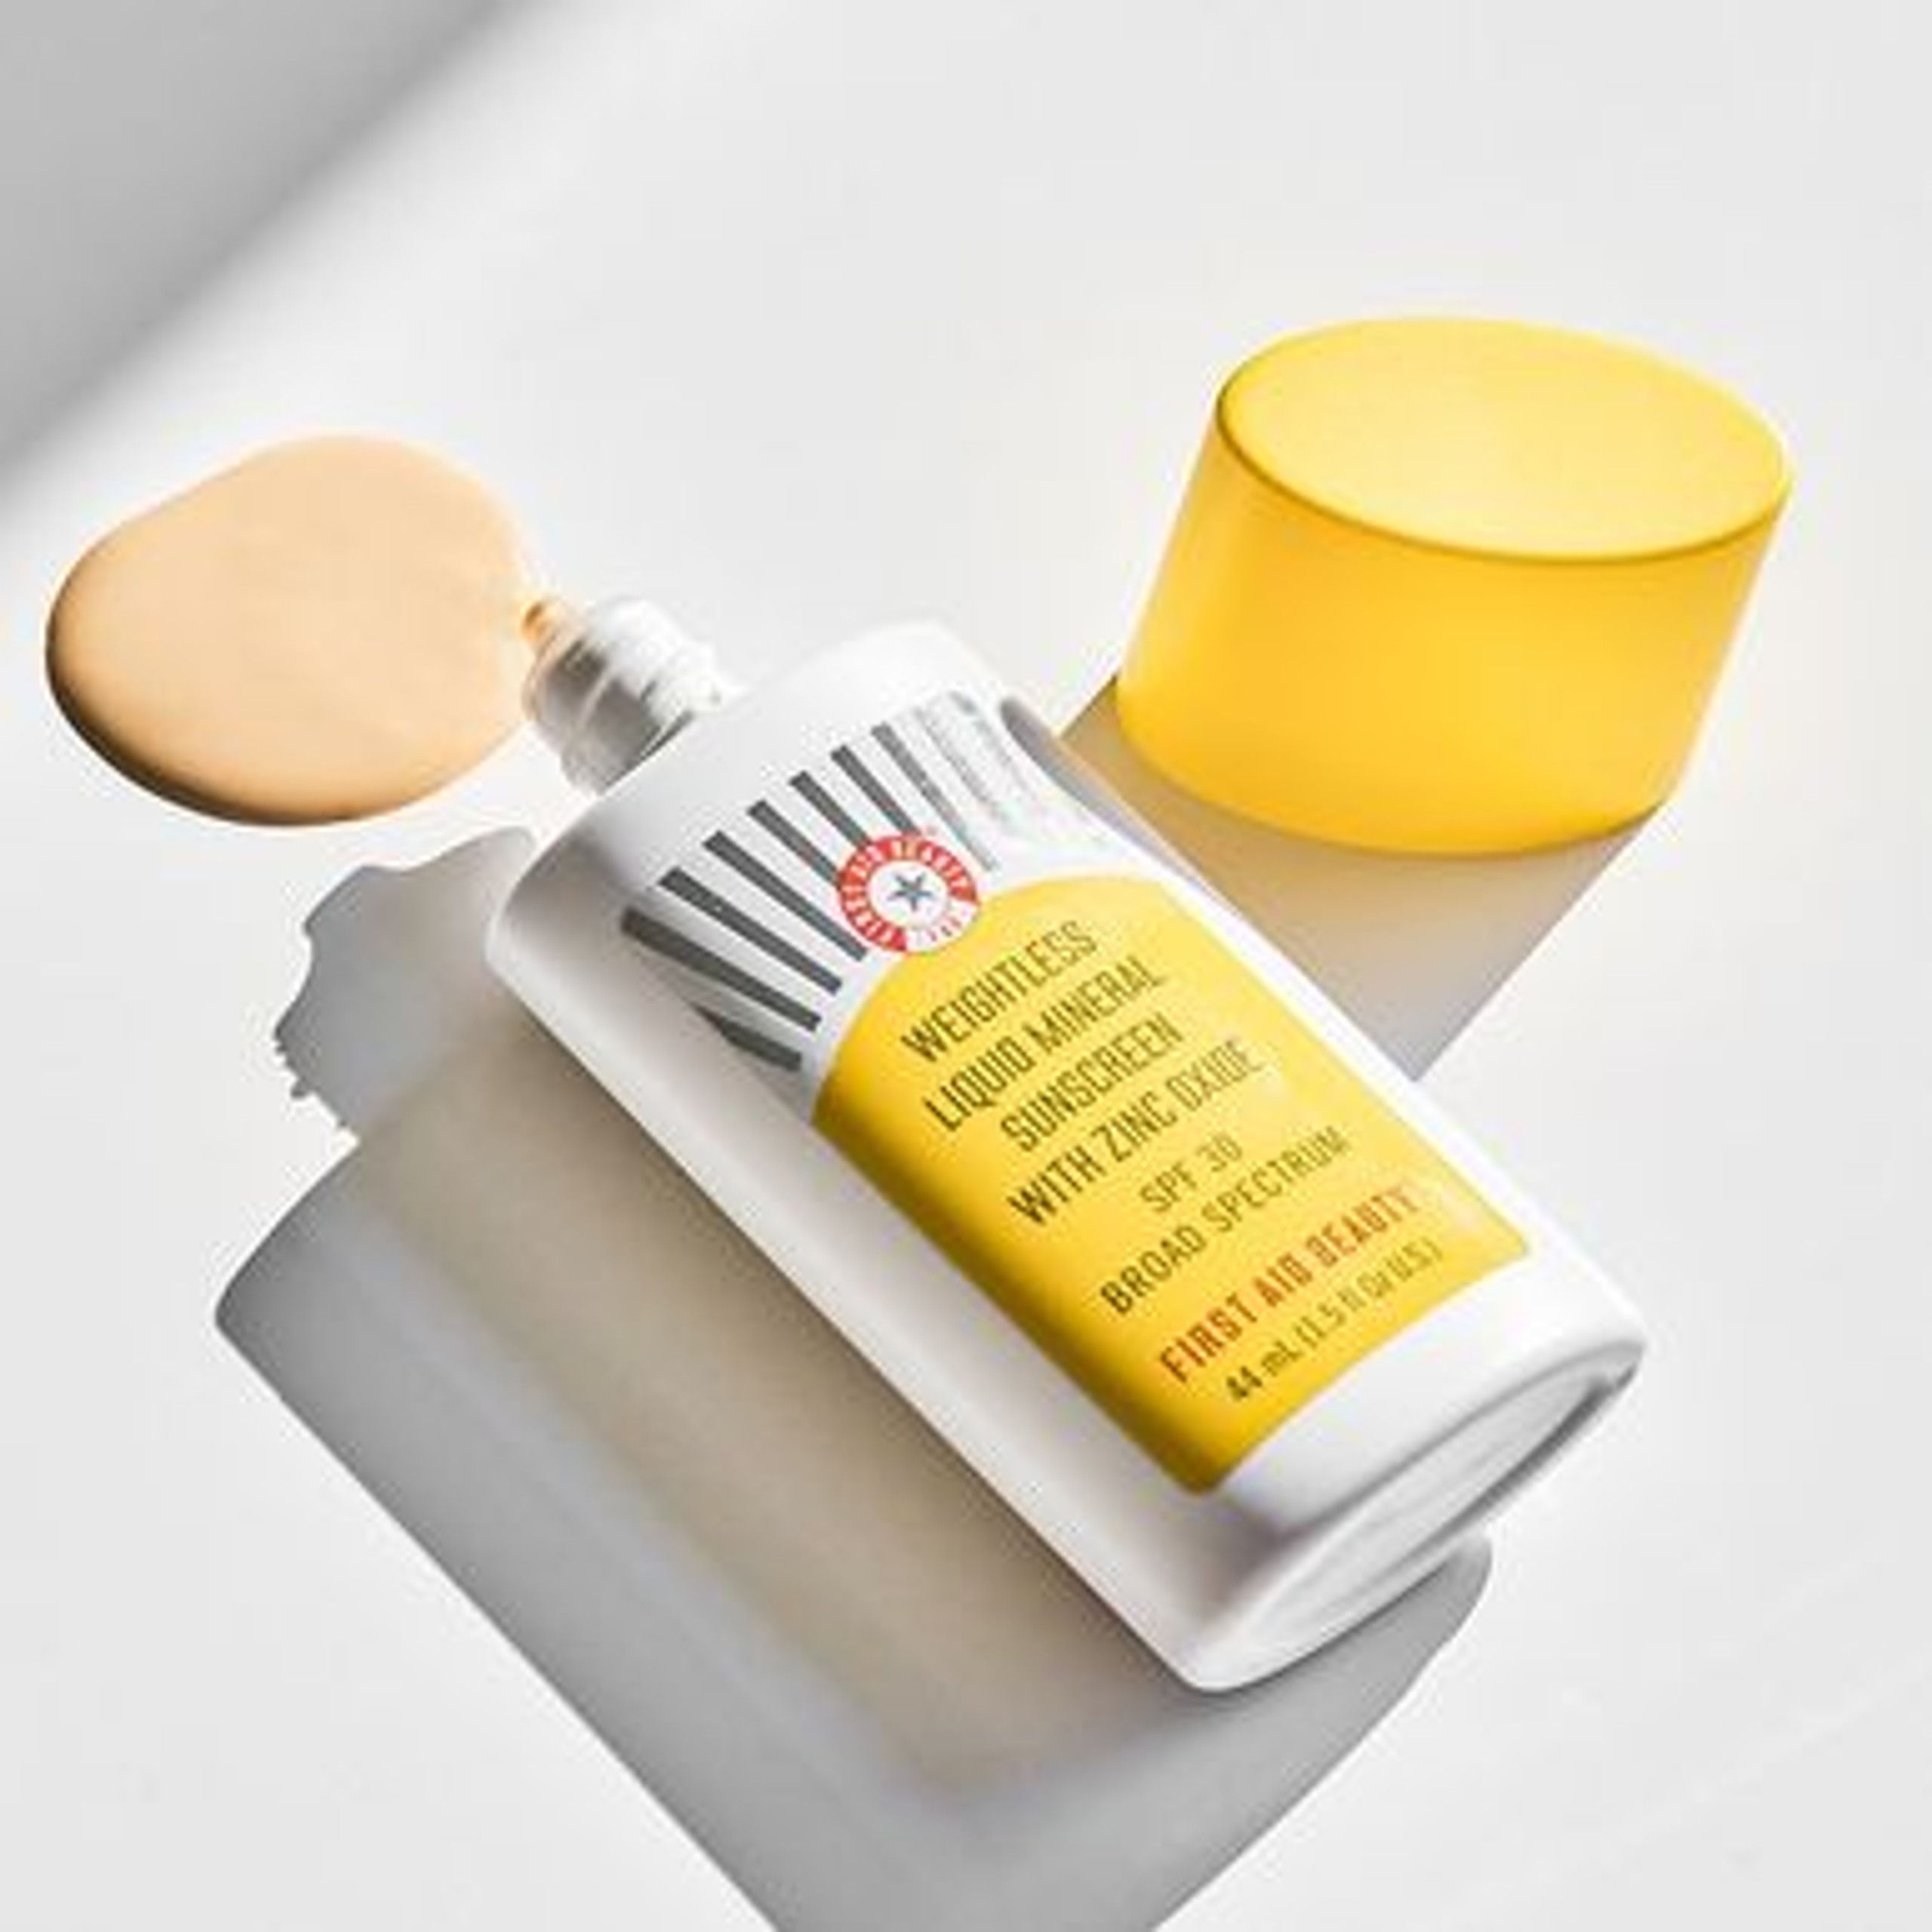 Weightless Liquid Mineral Sunscreen with Zinc Oxide SPF 30 | First Aid Beauty